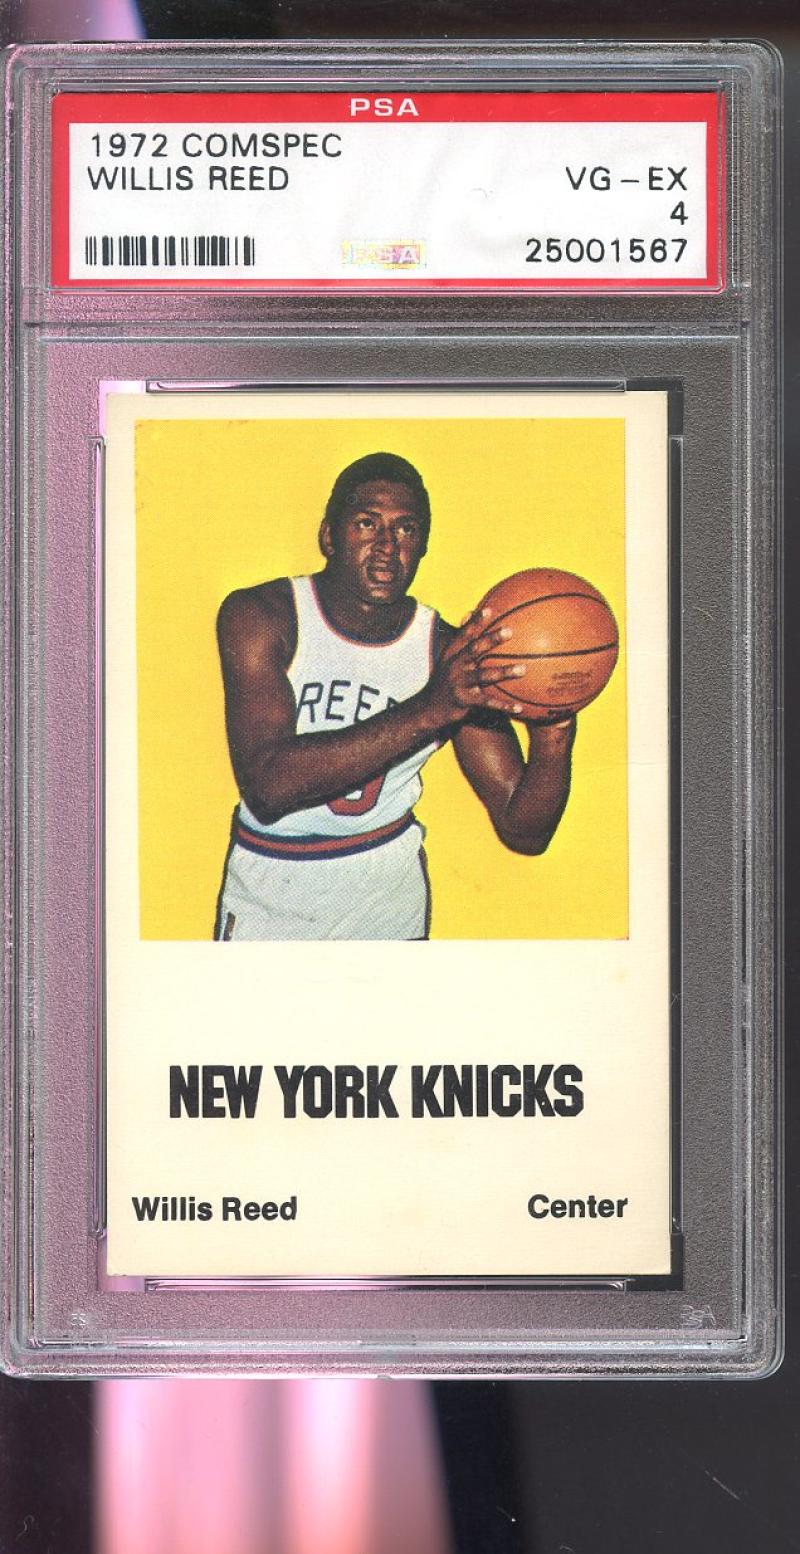 1972 Comspec Willis Reed New York Knicks VG-EX PSA 4 Graded Basketball Card